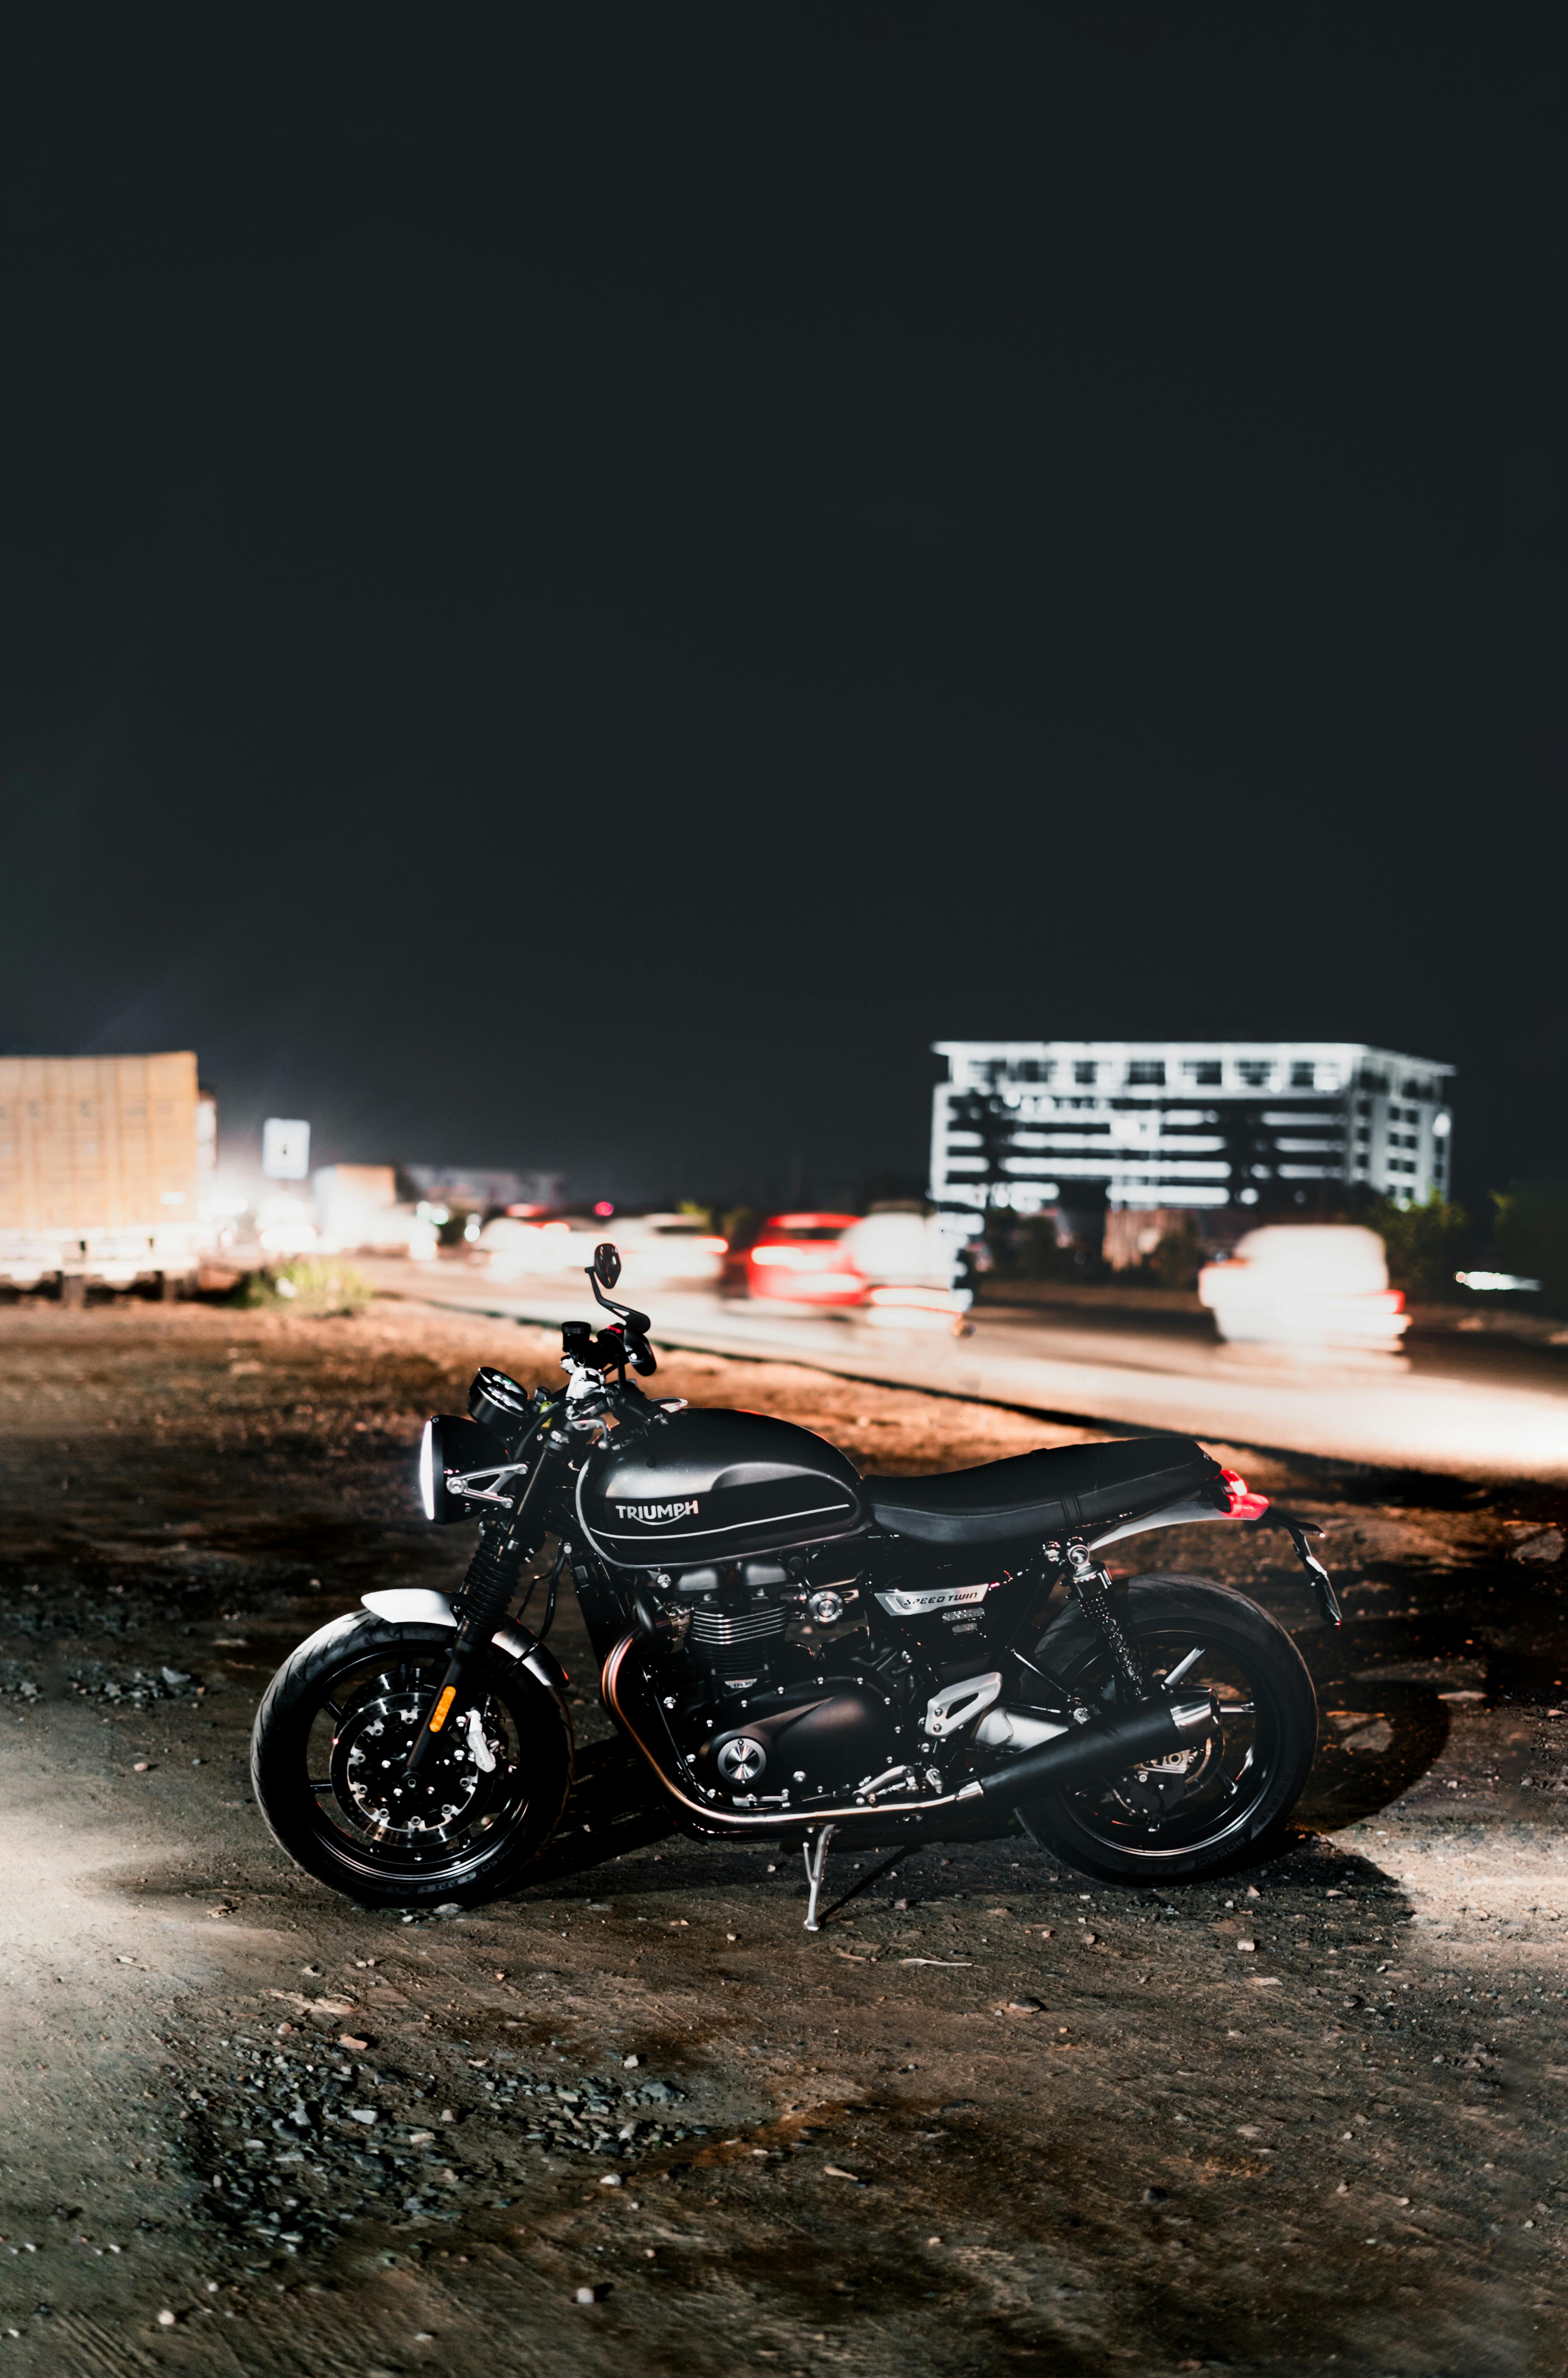 Black Motorcycle at Night